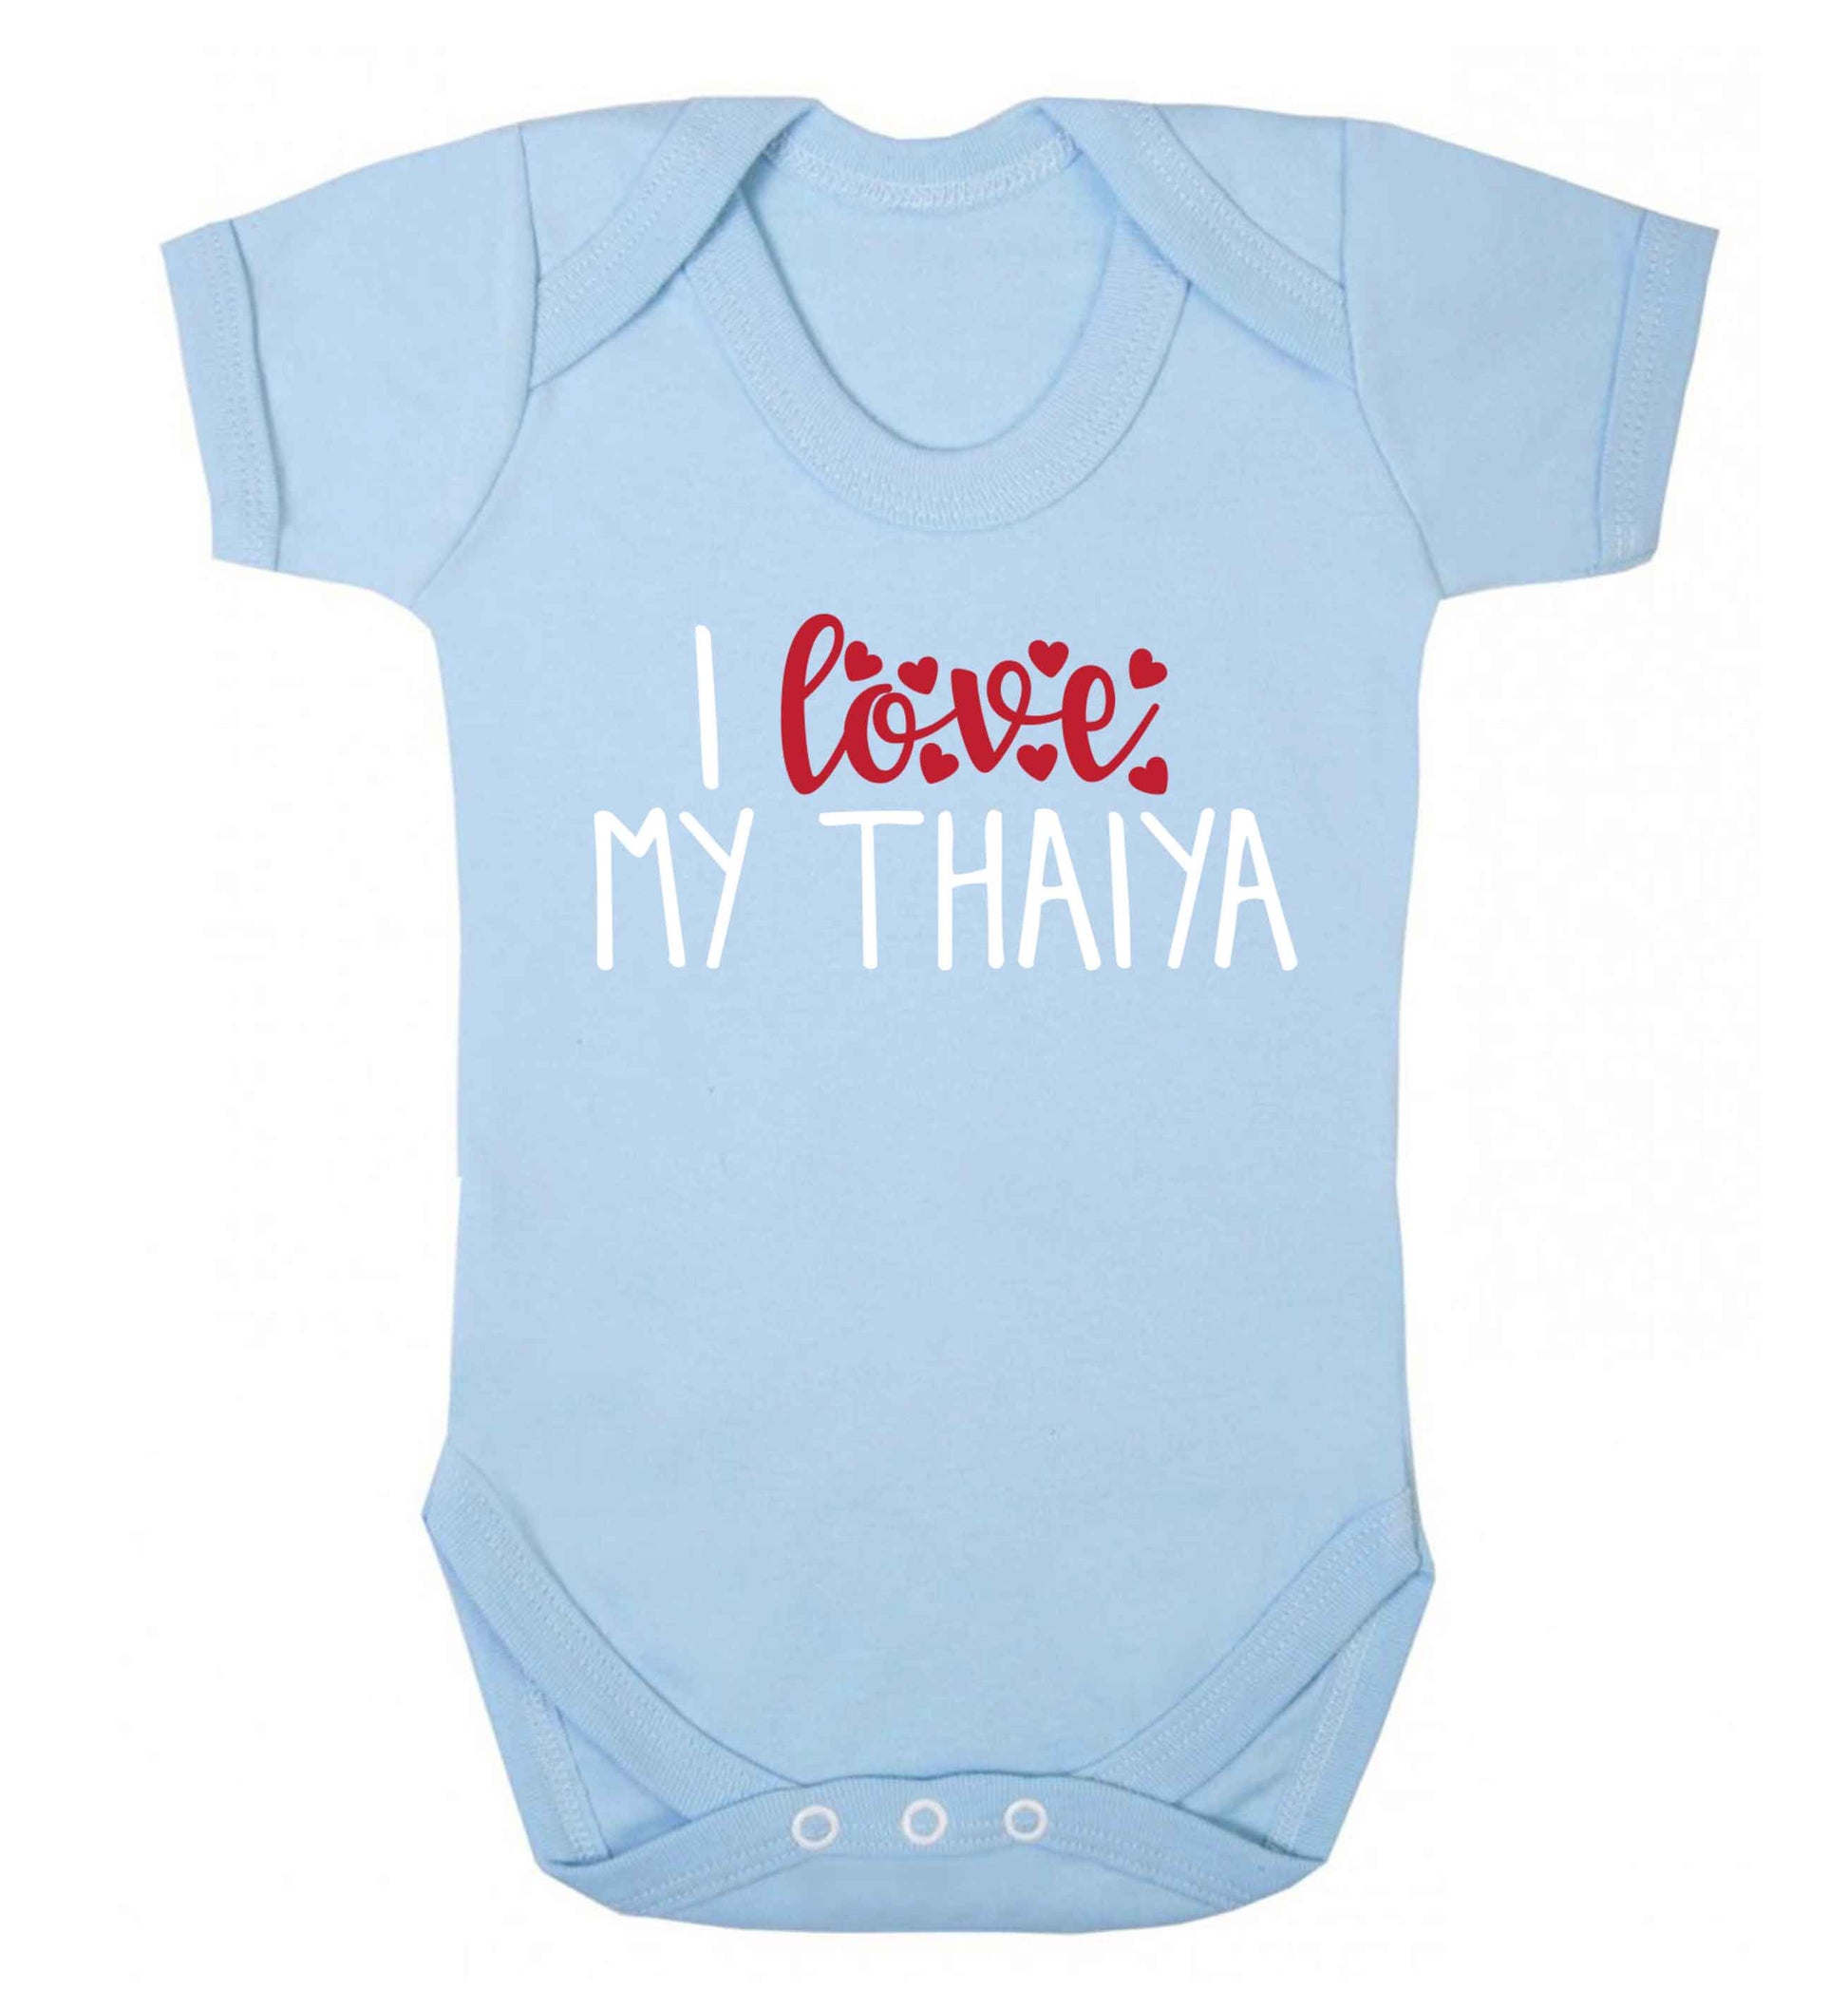 I love my thaiya Baby Vest pale blue 18-24 months